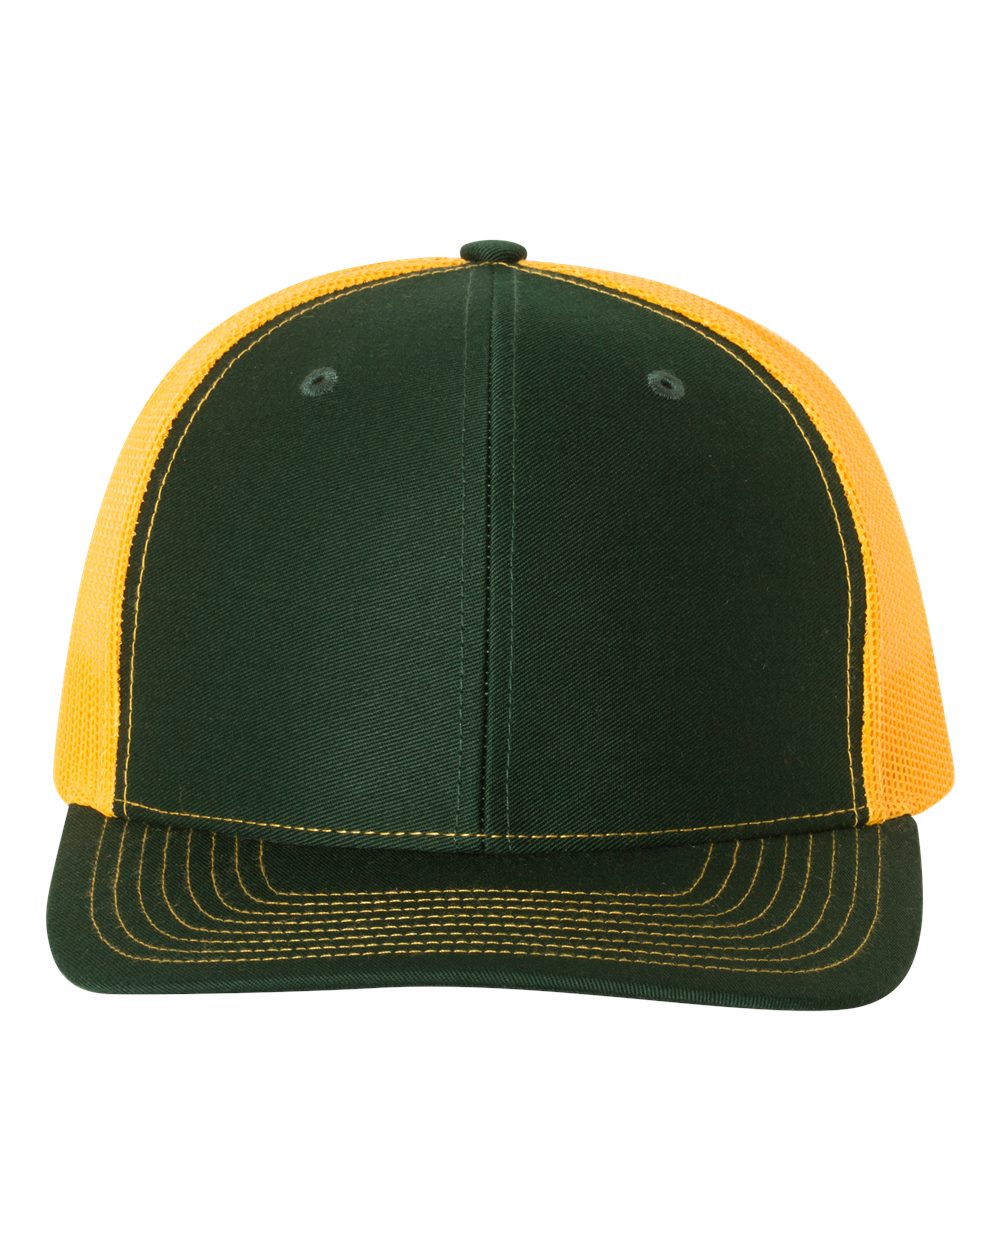 Richardson Snapback Trucker Hat (112) in Dark Green/Gold